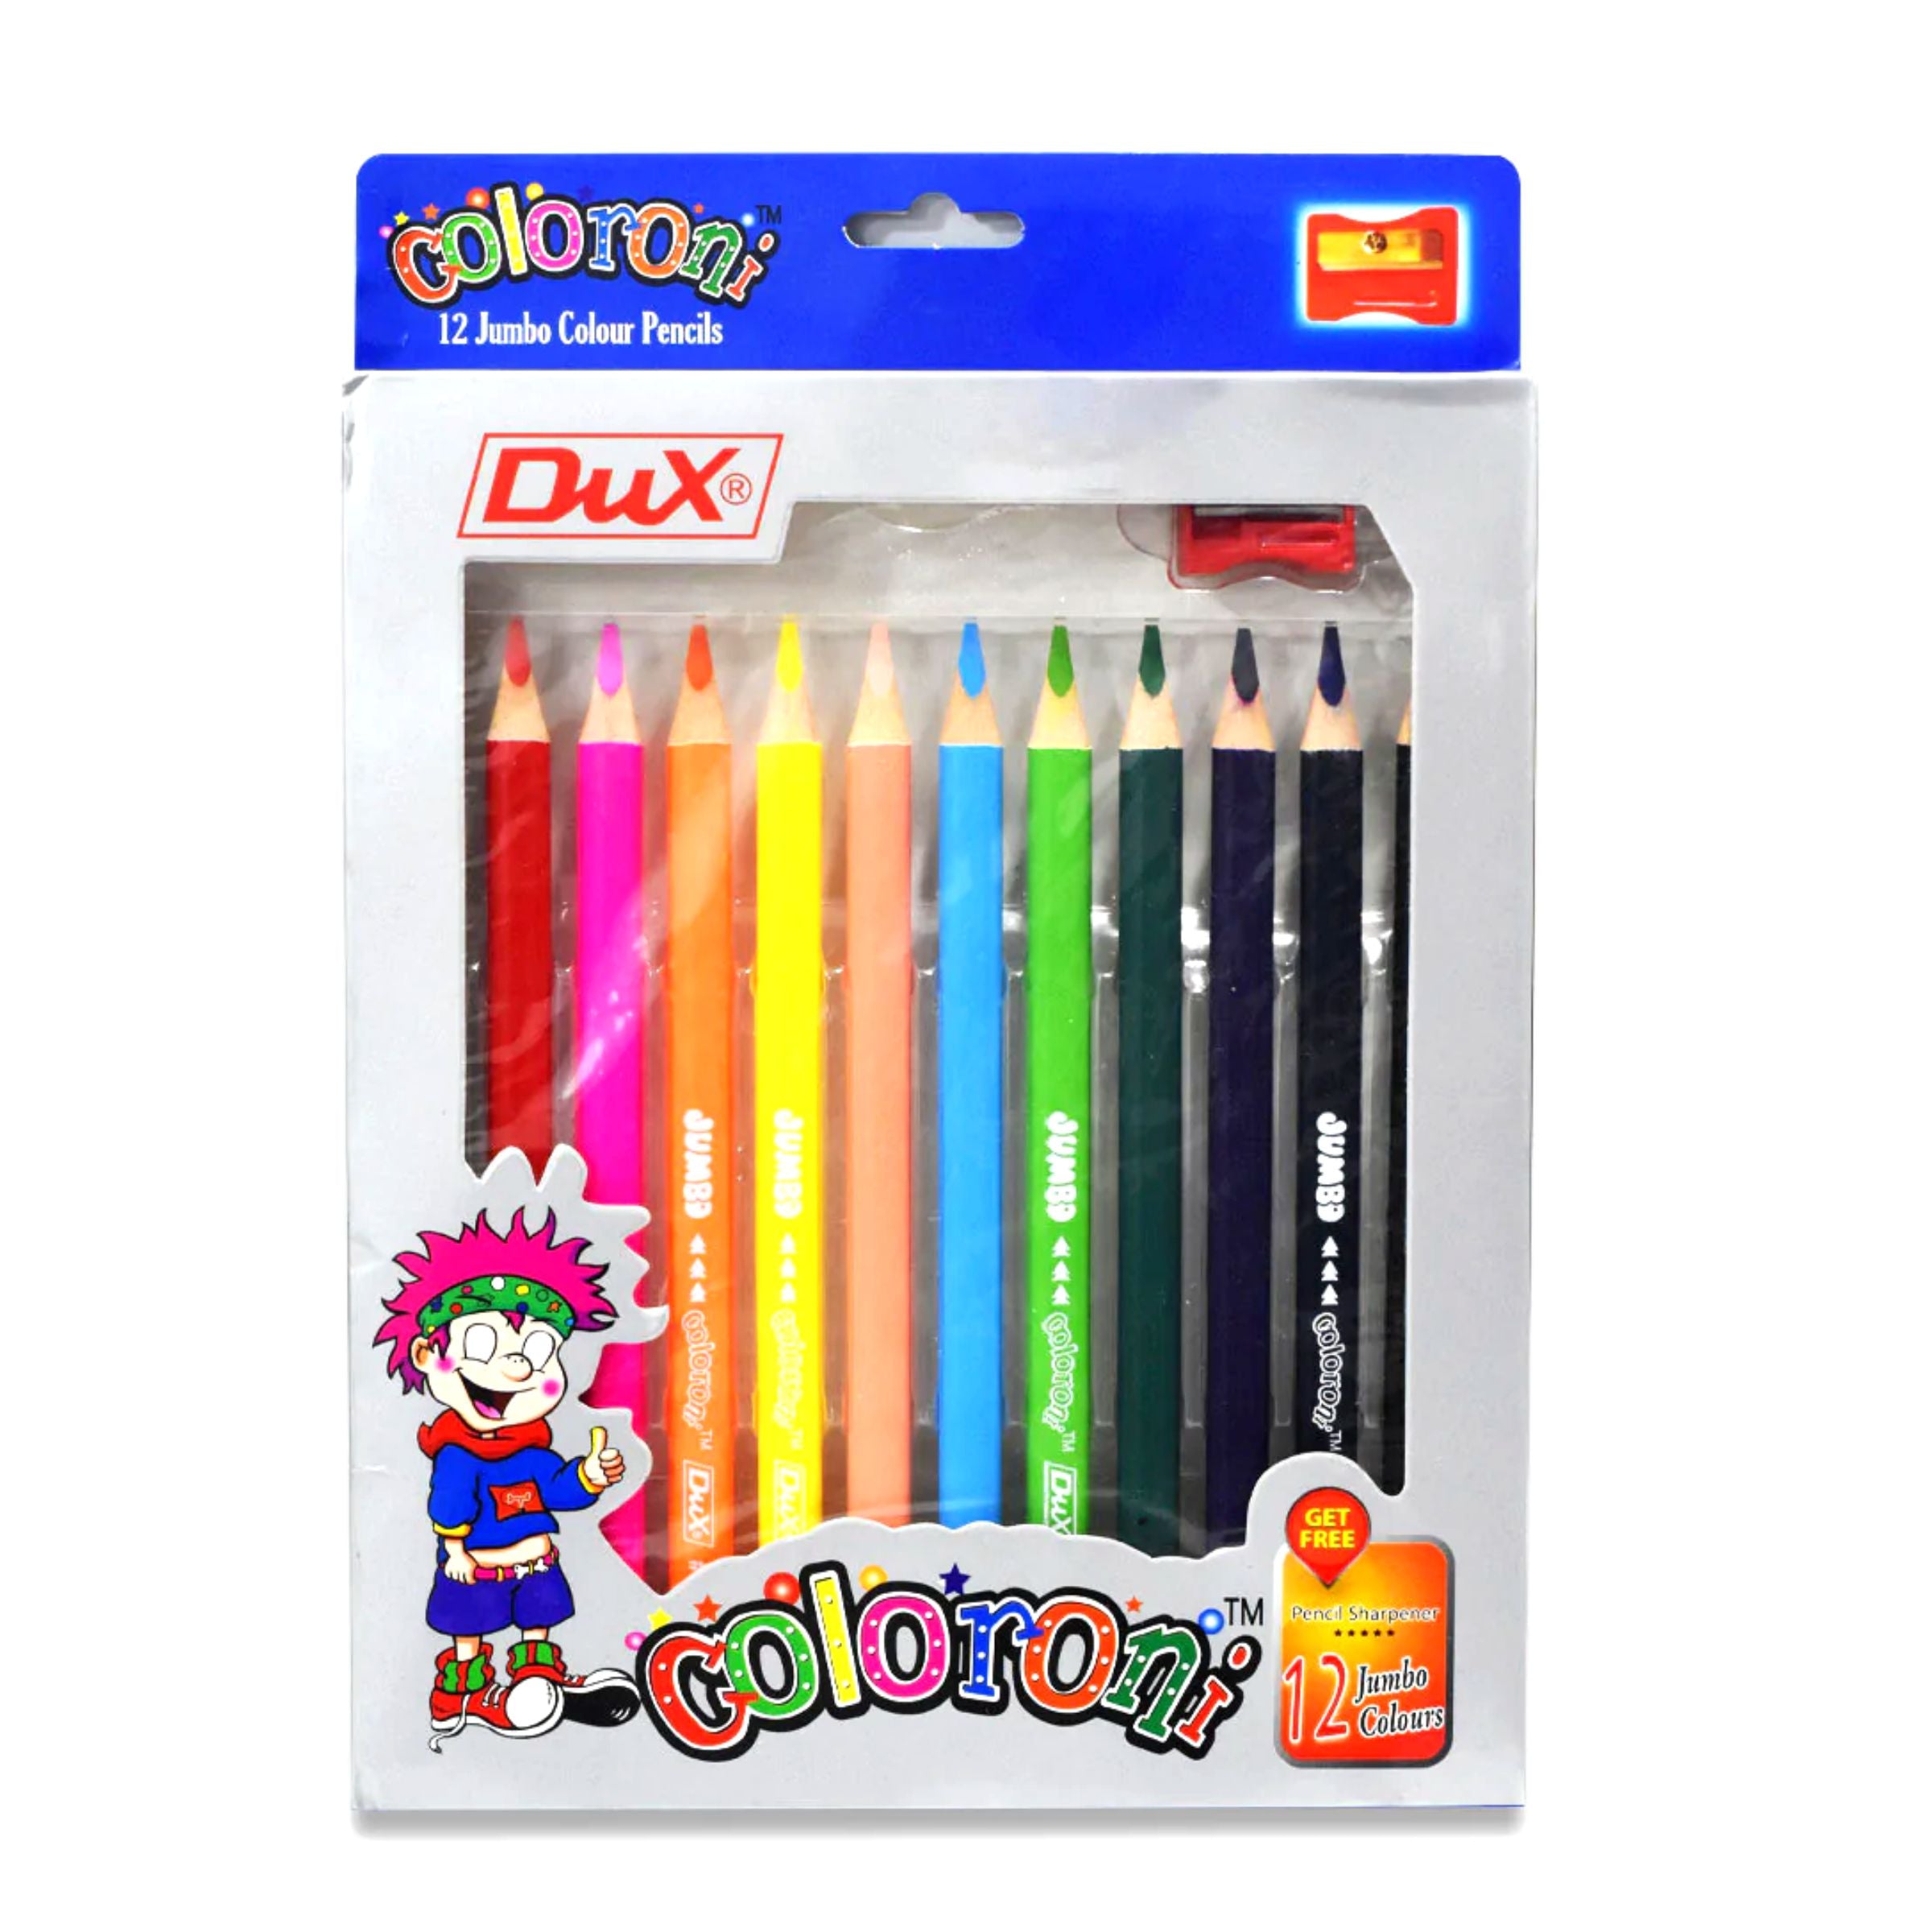 Dux Coloroni 12 Jumbo Color Pencil (712)